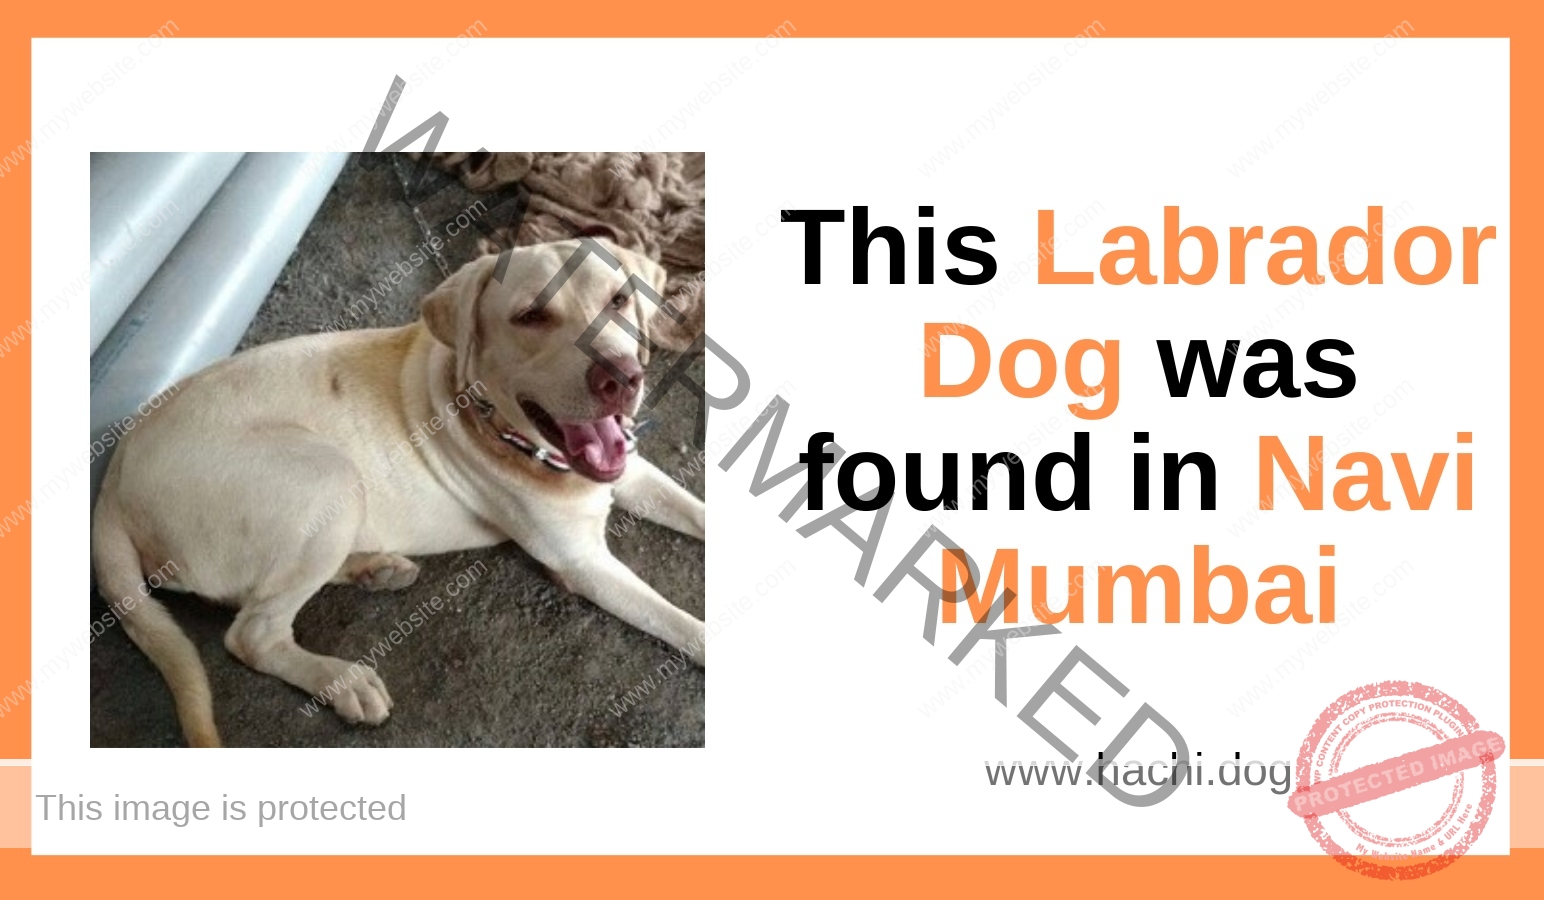 A Male Labrador Dog Found in Navi Mumbai